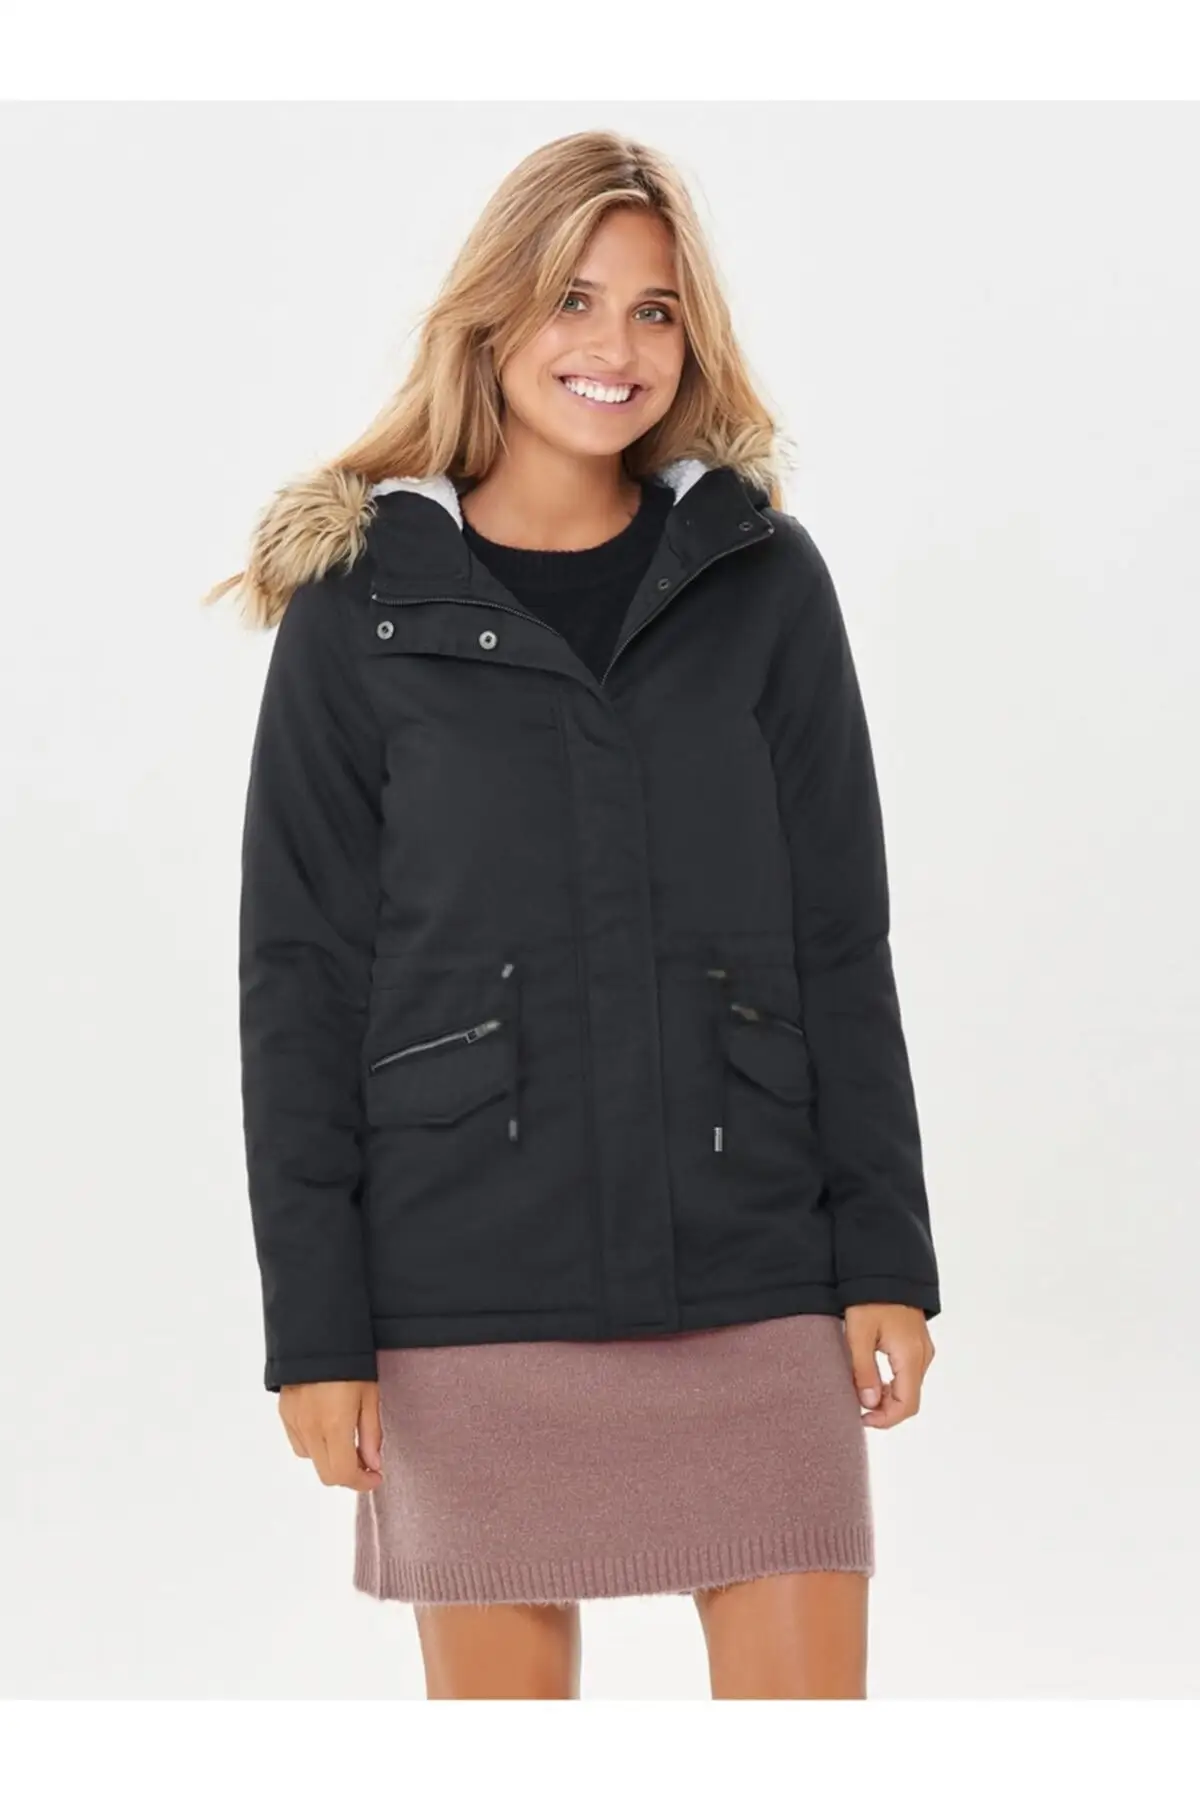 Women's Hooded Black Coats Onlruby Short Casual Stylish Fashion Women's Clothing Outdoor Winter Wear Female Black Coats